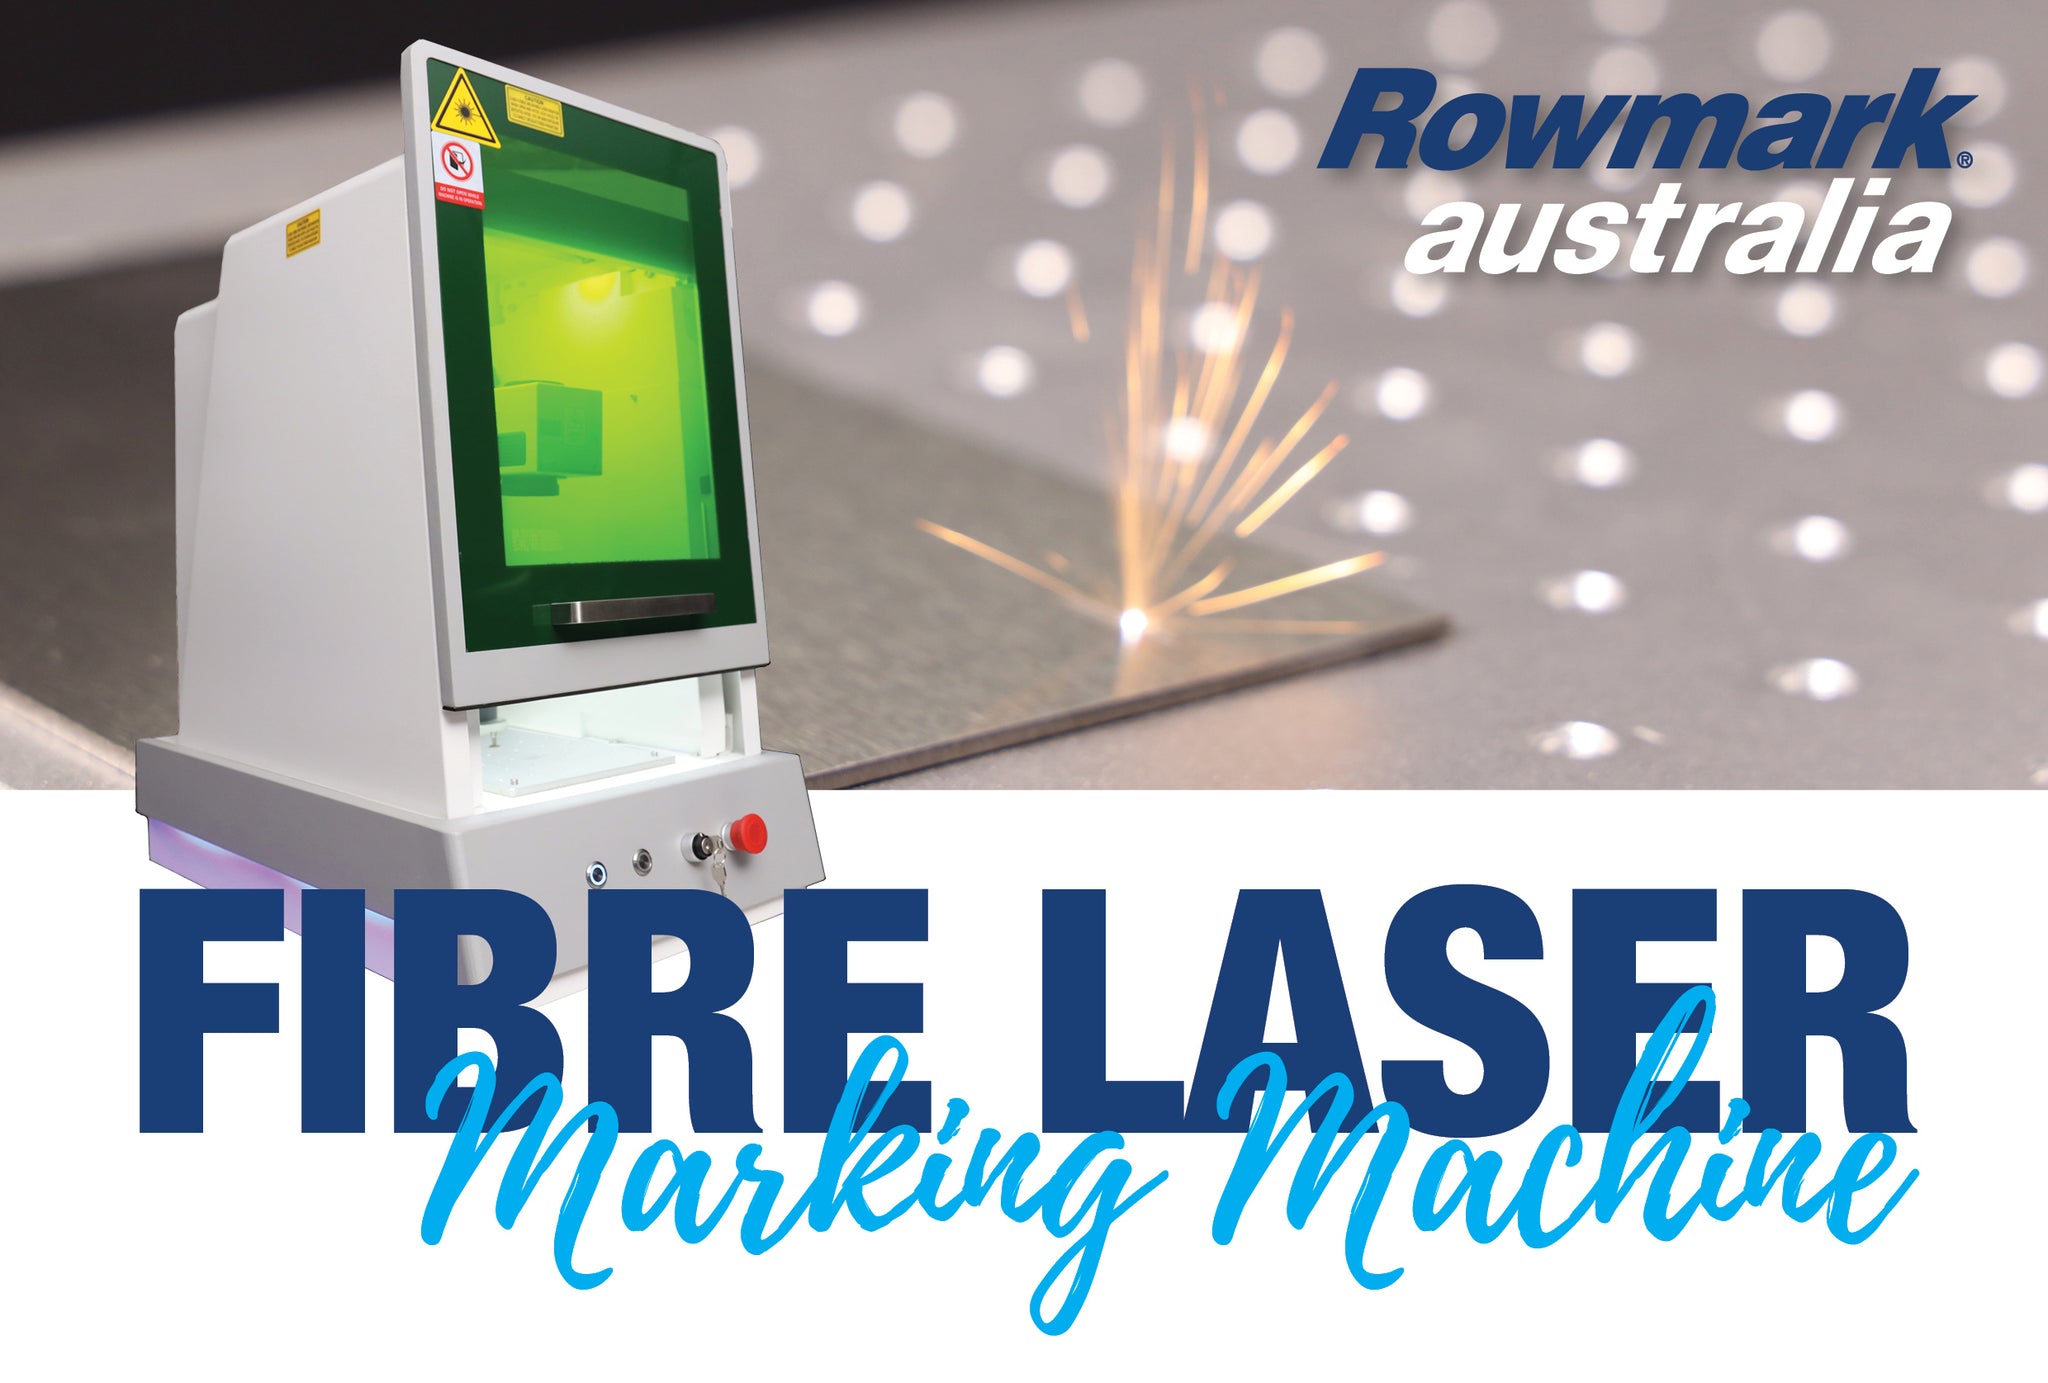 Fibre Laser, Fibre Laser Marking Machine